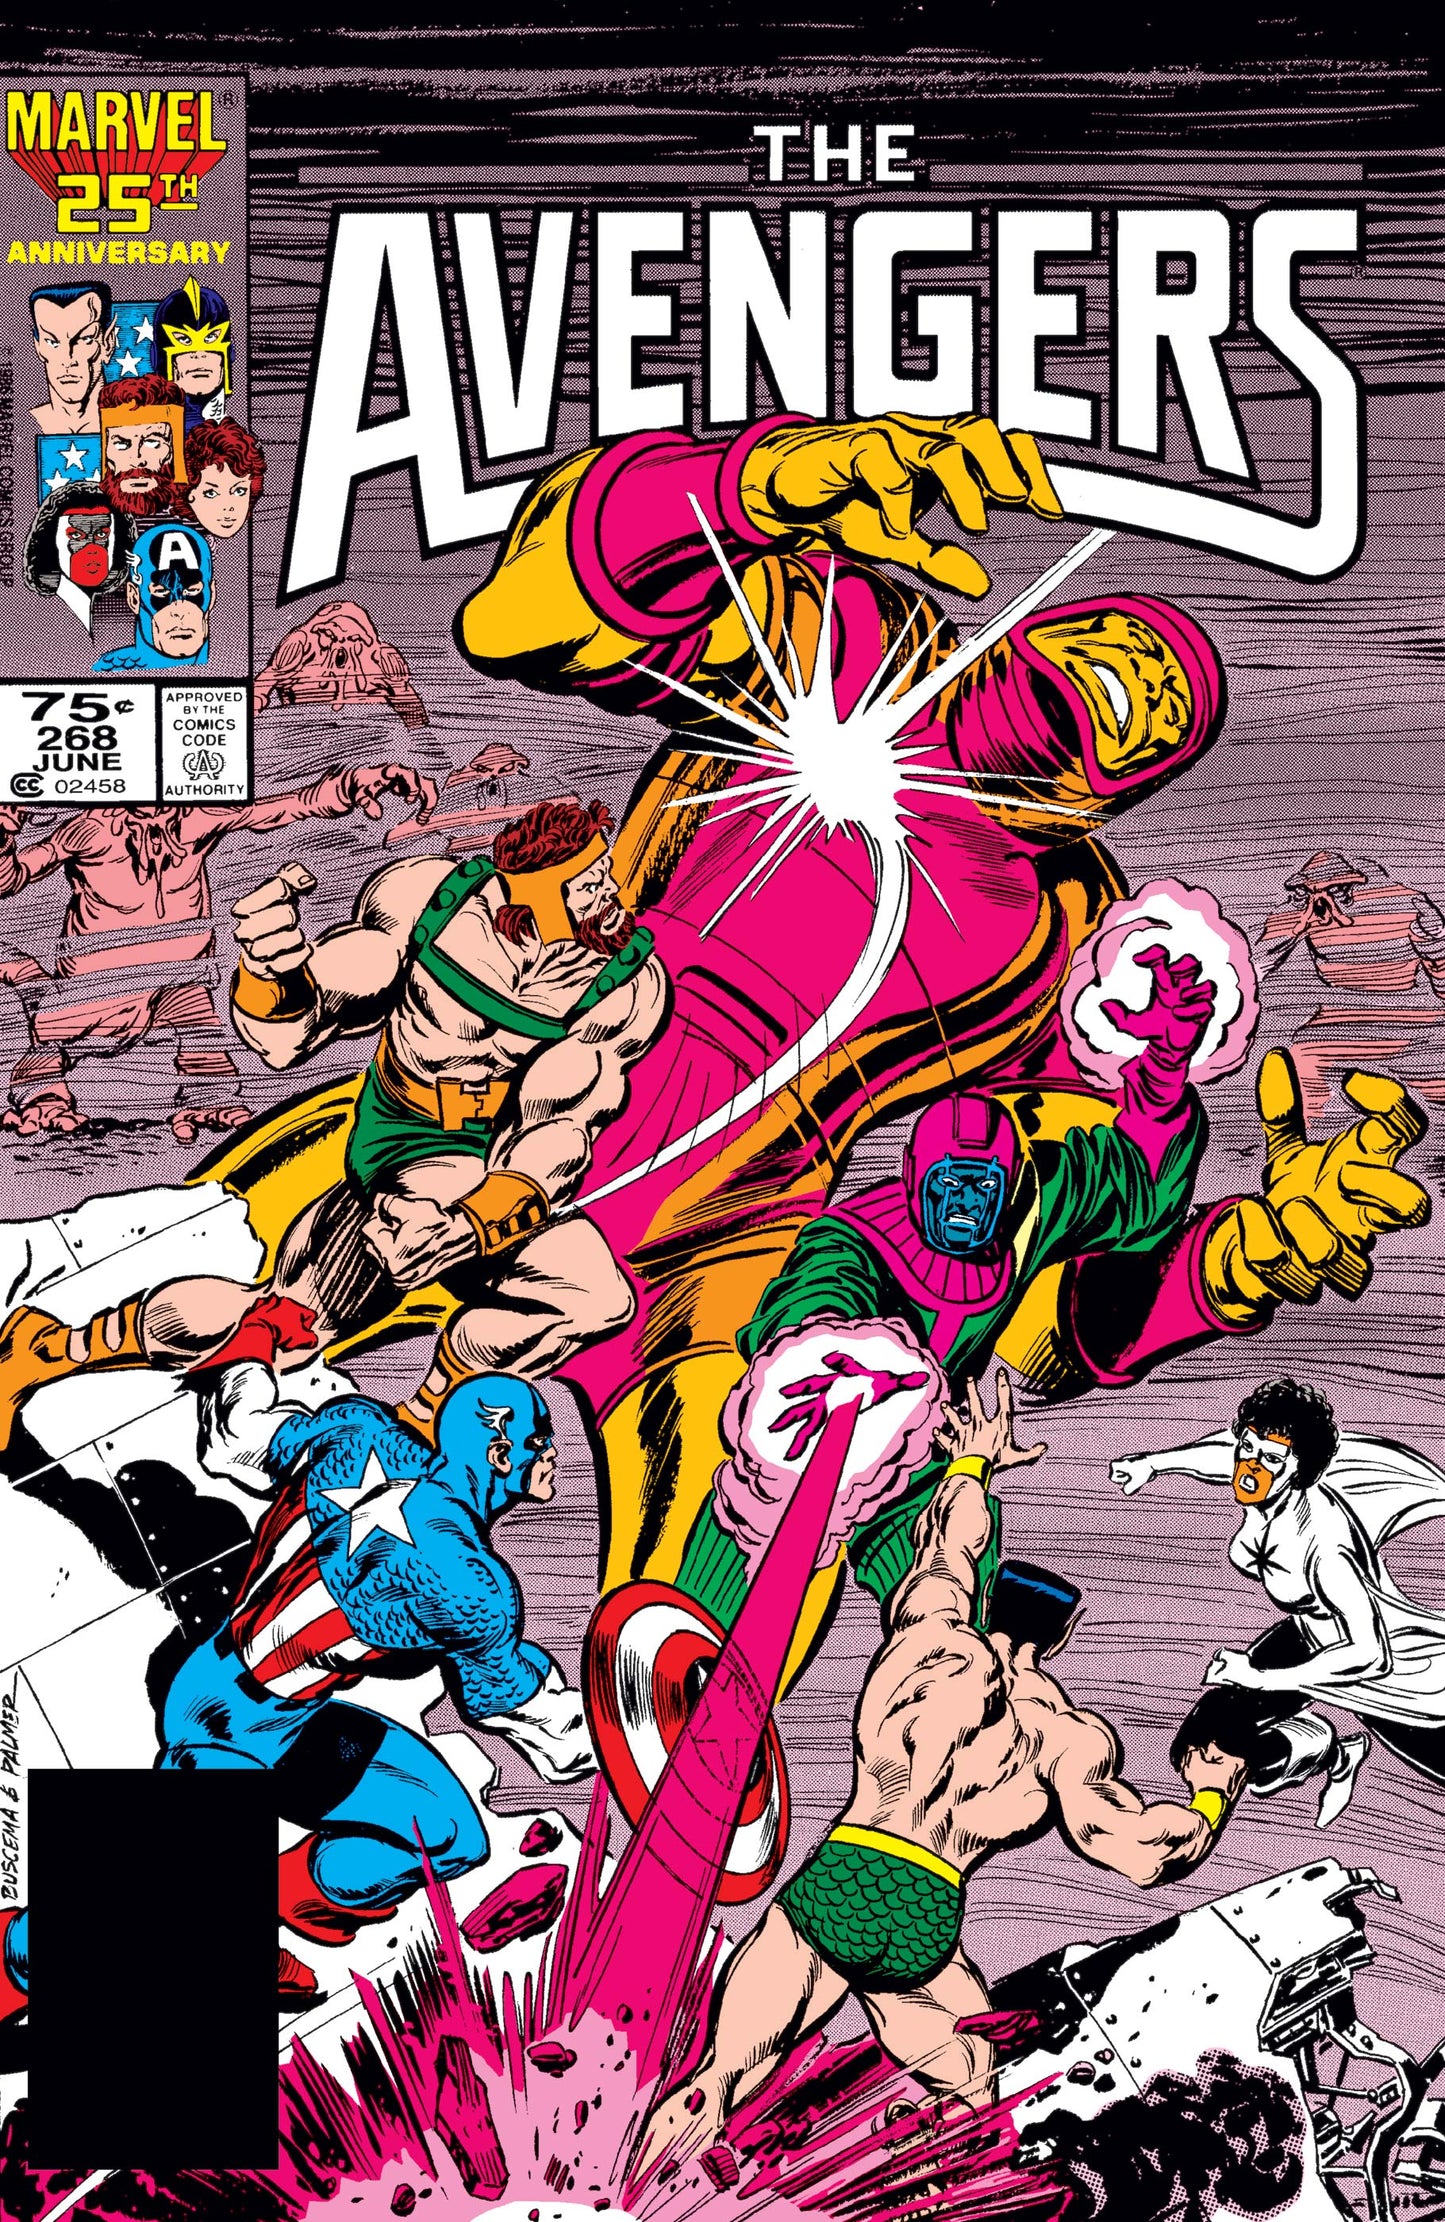 The Avengers #268